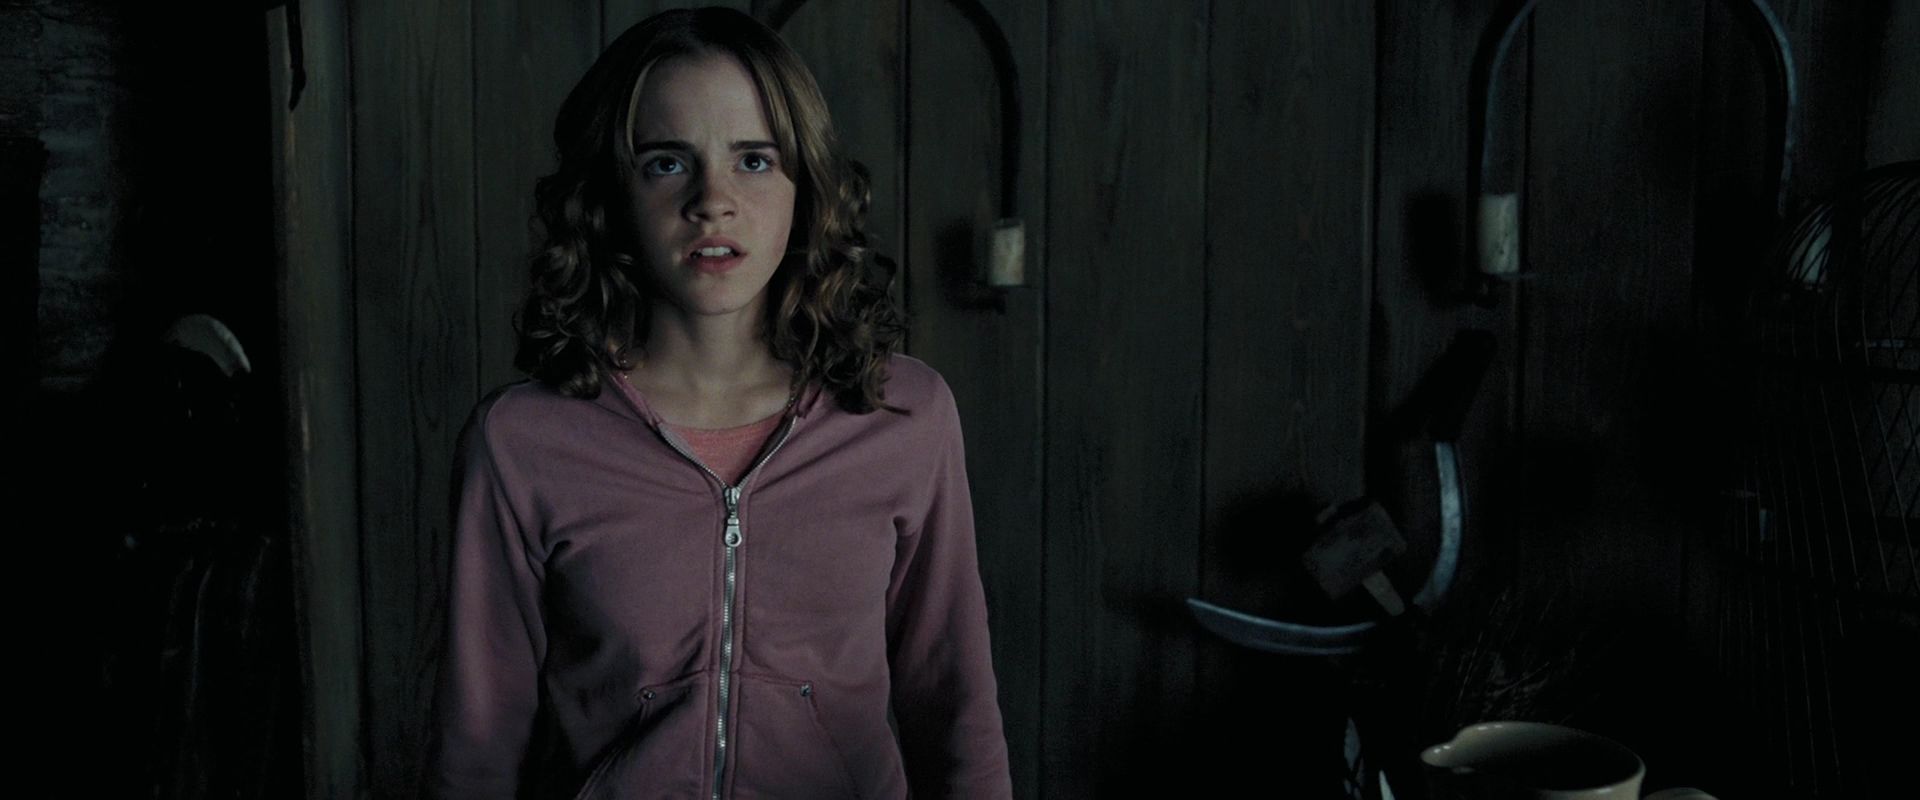 Emma As Hermione Granger In Harry Potter And The Prisoner Of Azkaban